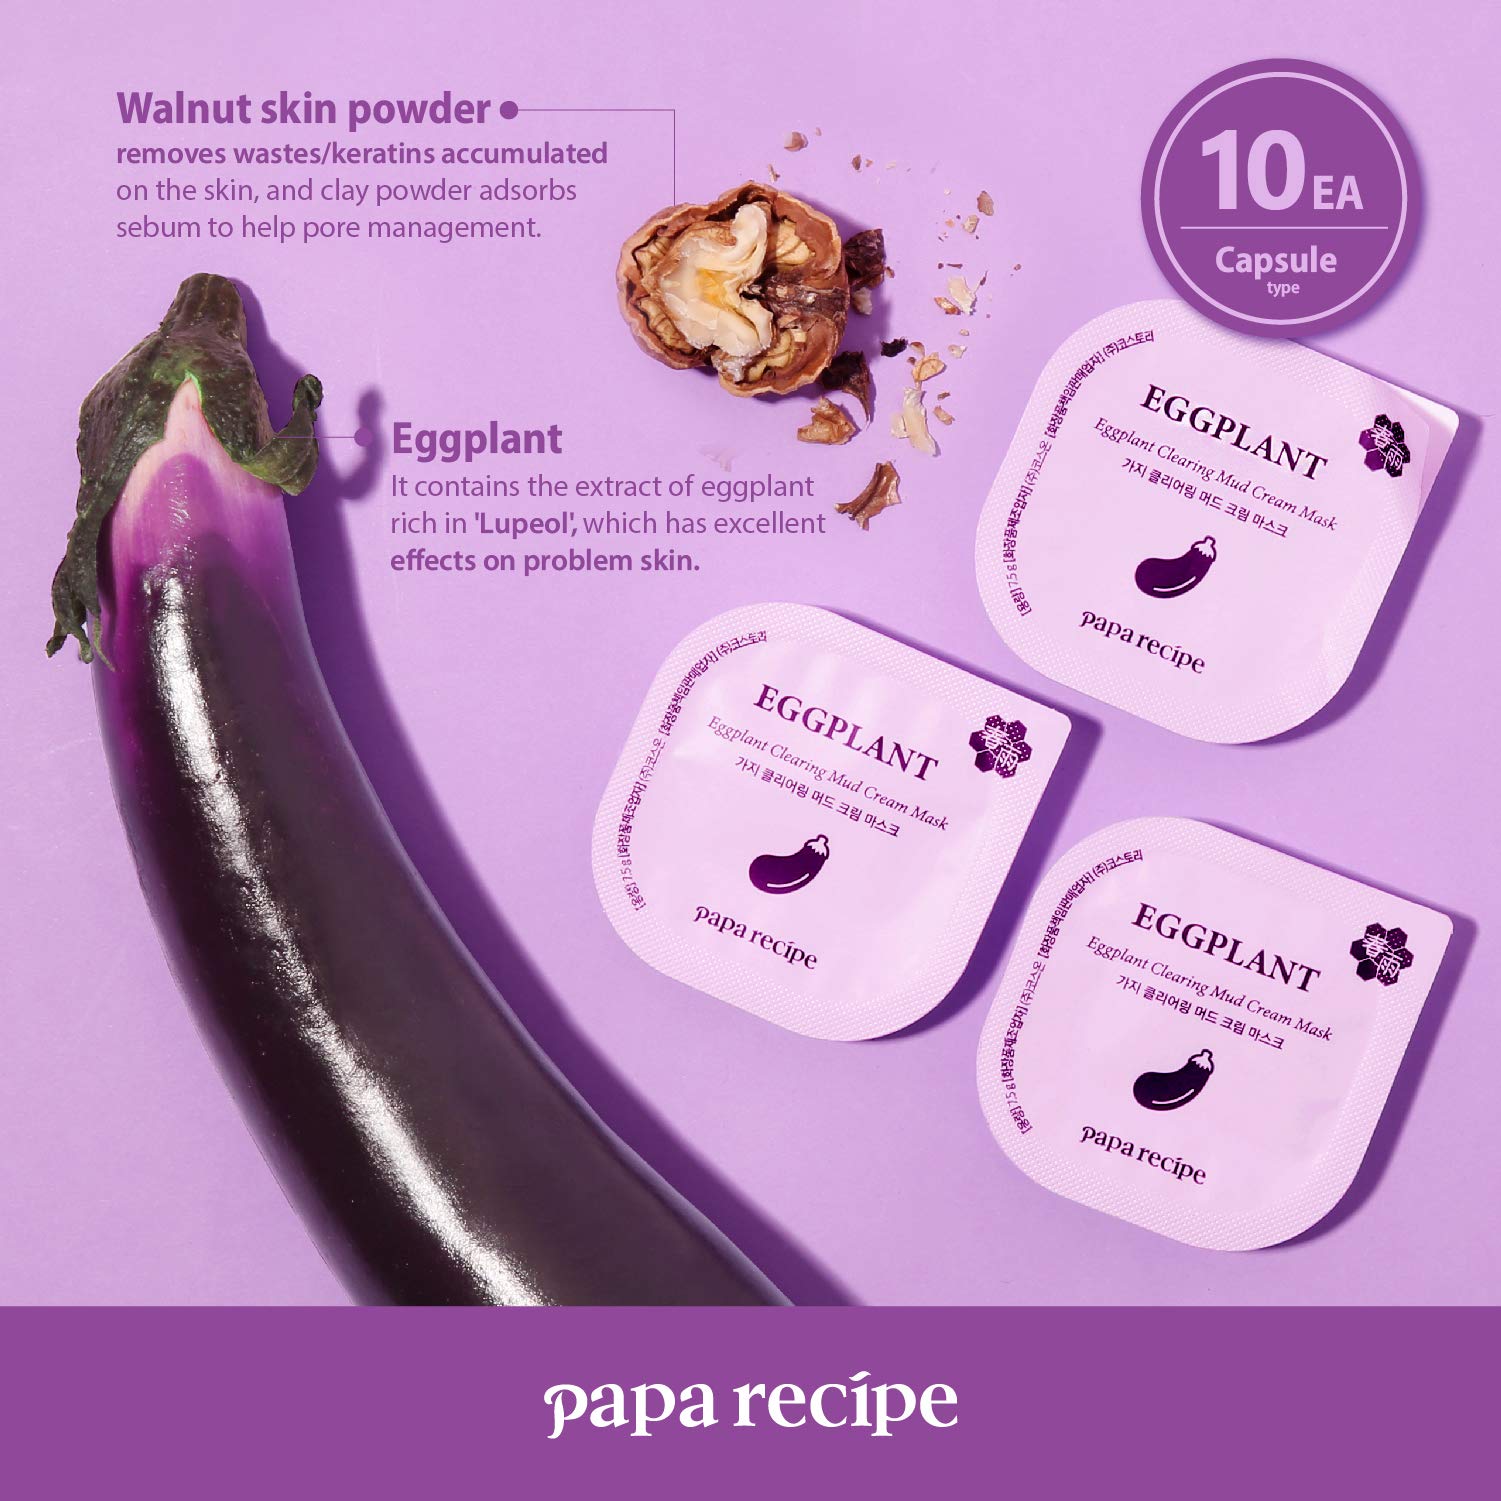 Papa Recipe Eggplant Clear Hydration Mud Mask 7.5g*10pcs 春雨茄子清透水感泥膜